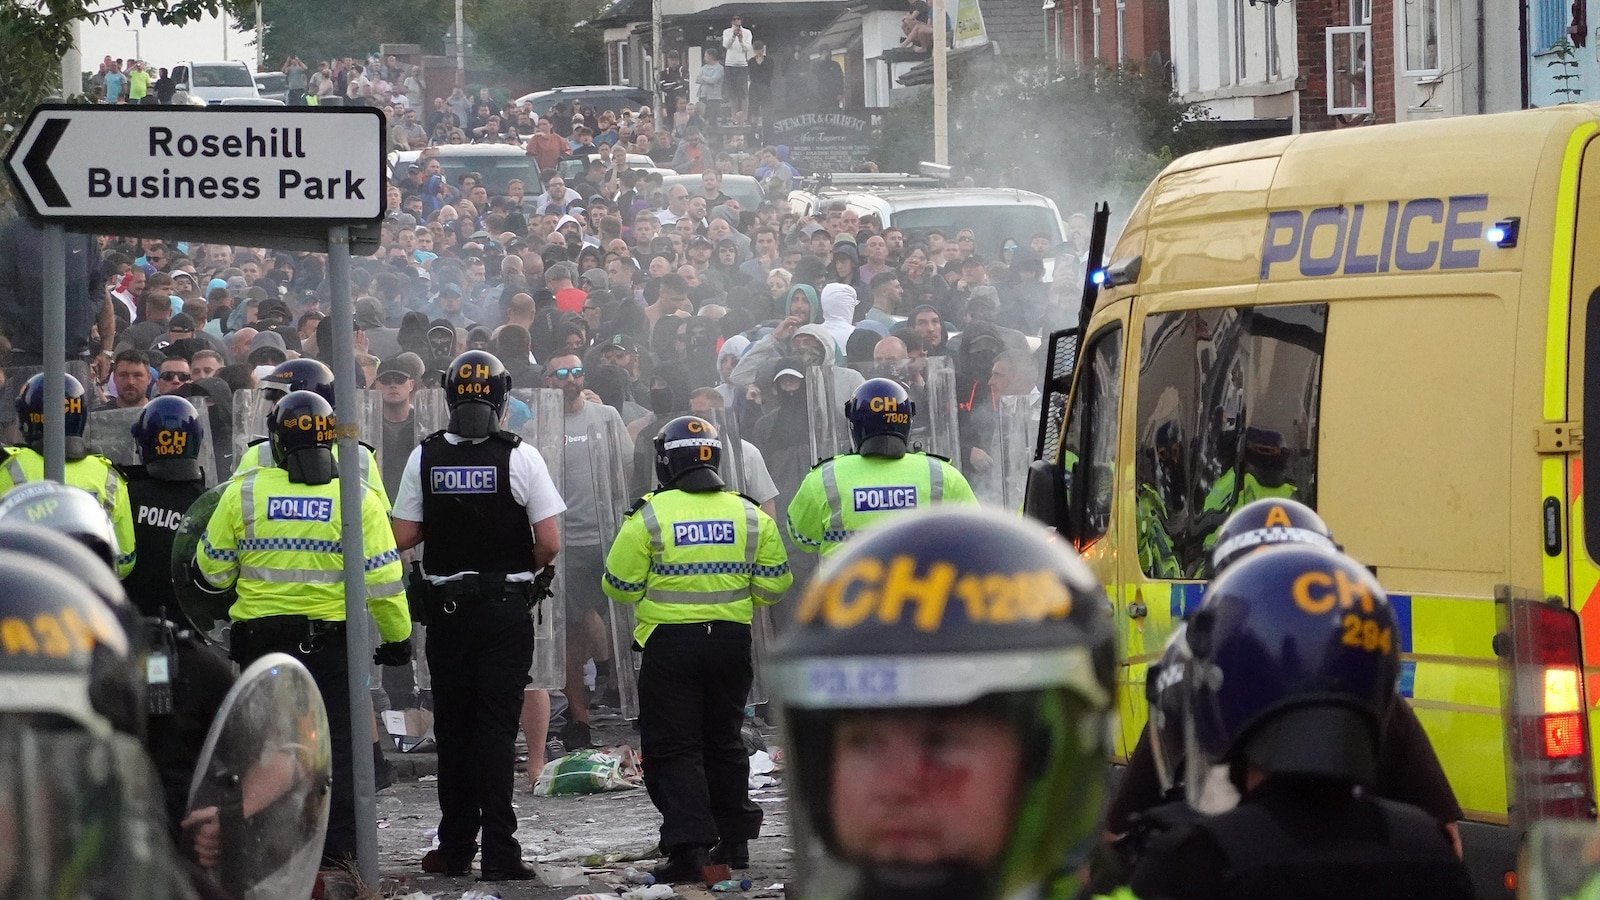 Violent protest breaks out in UK after vigil over stabbing spree: Police